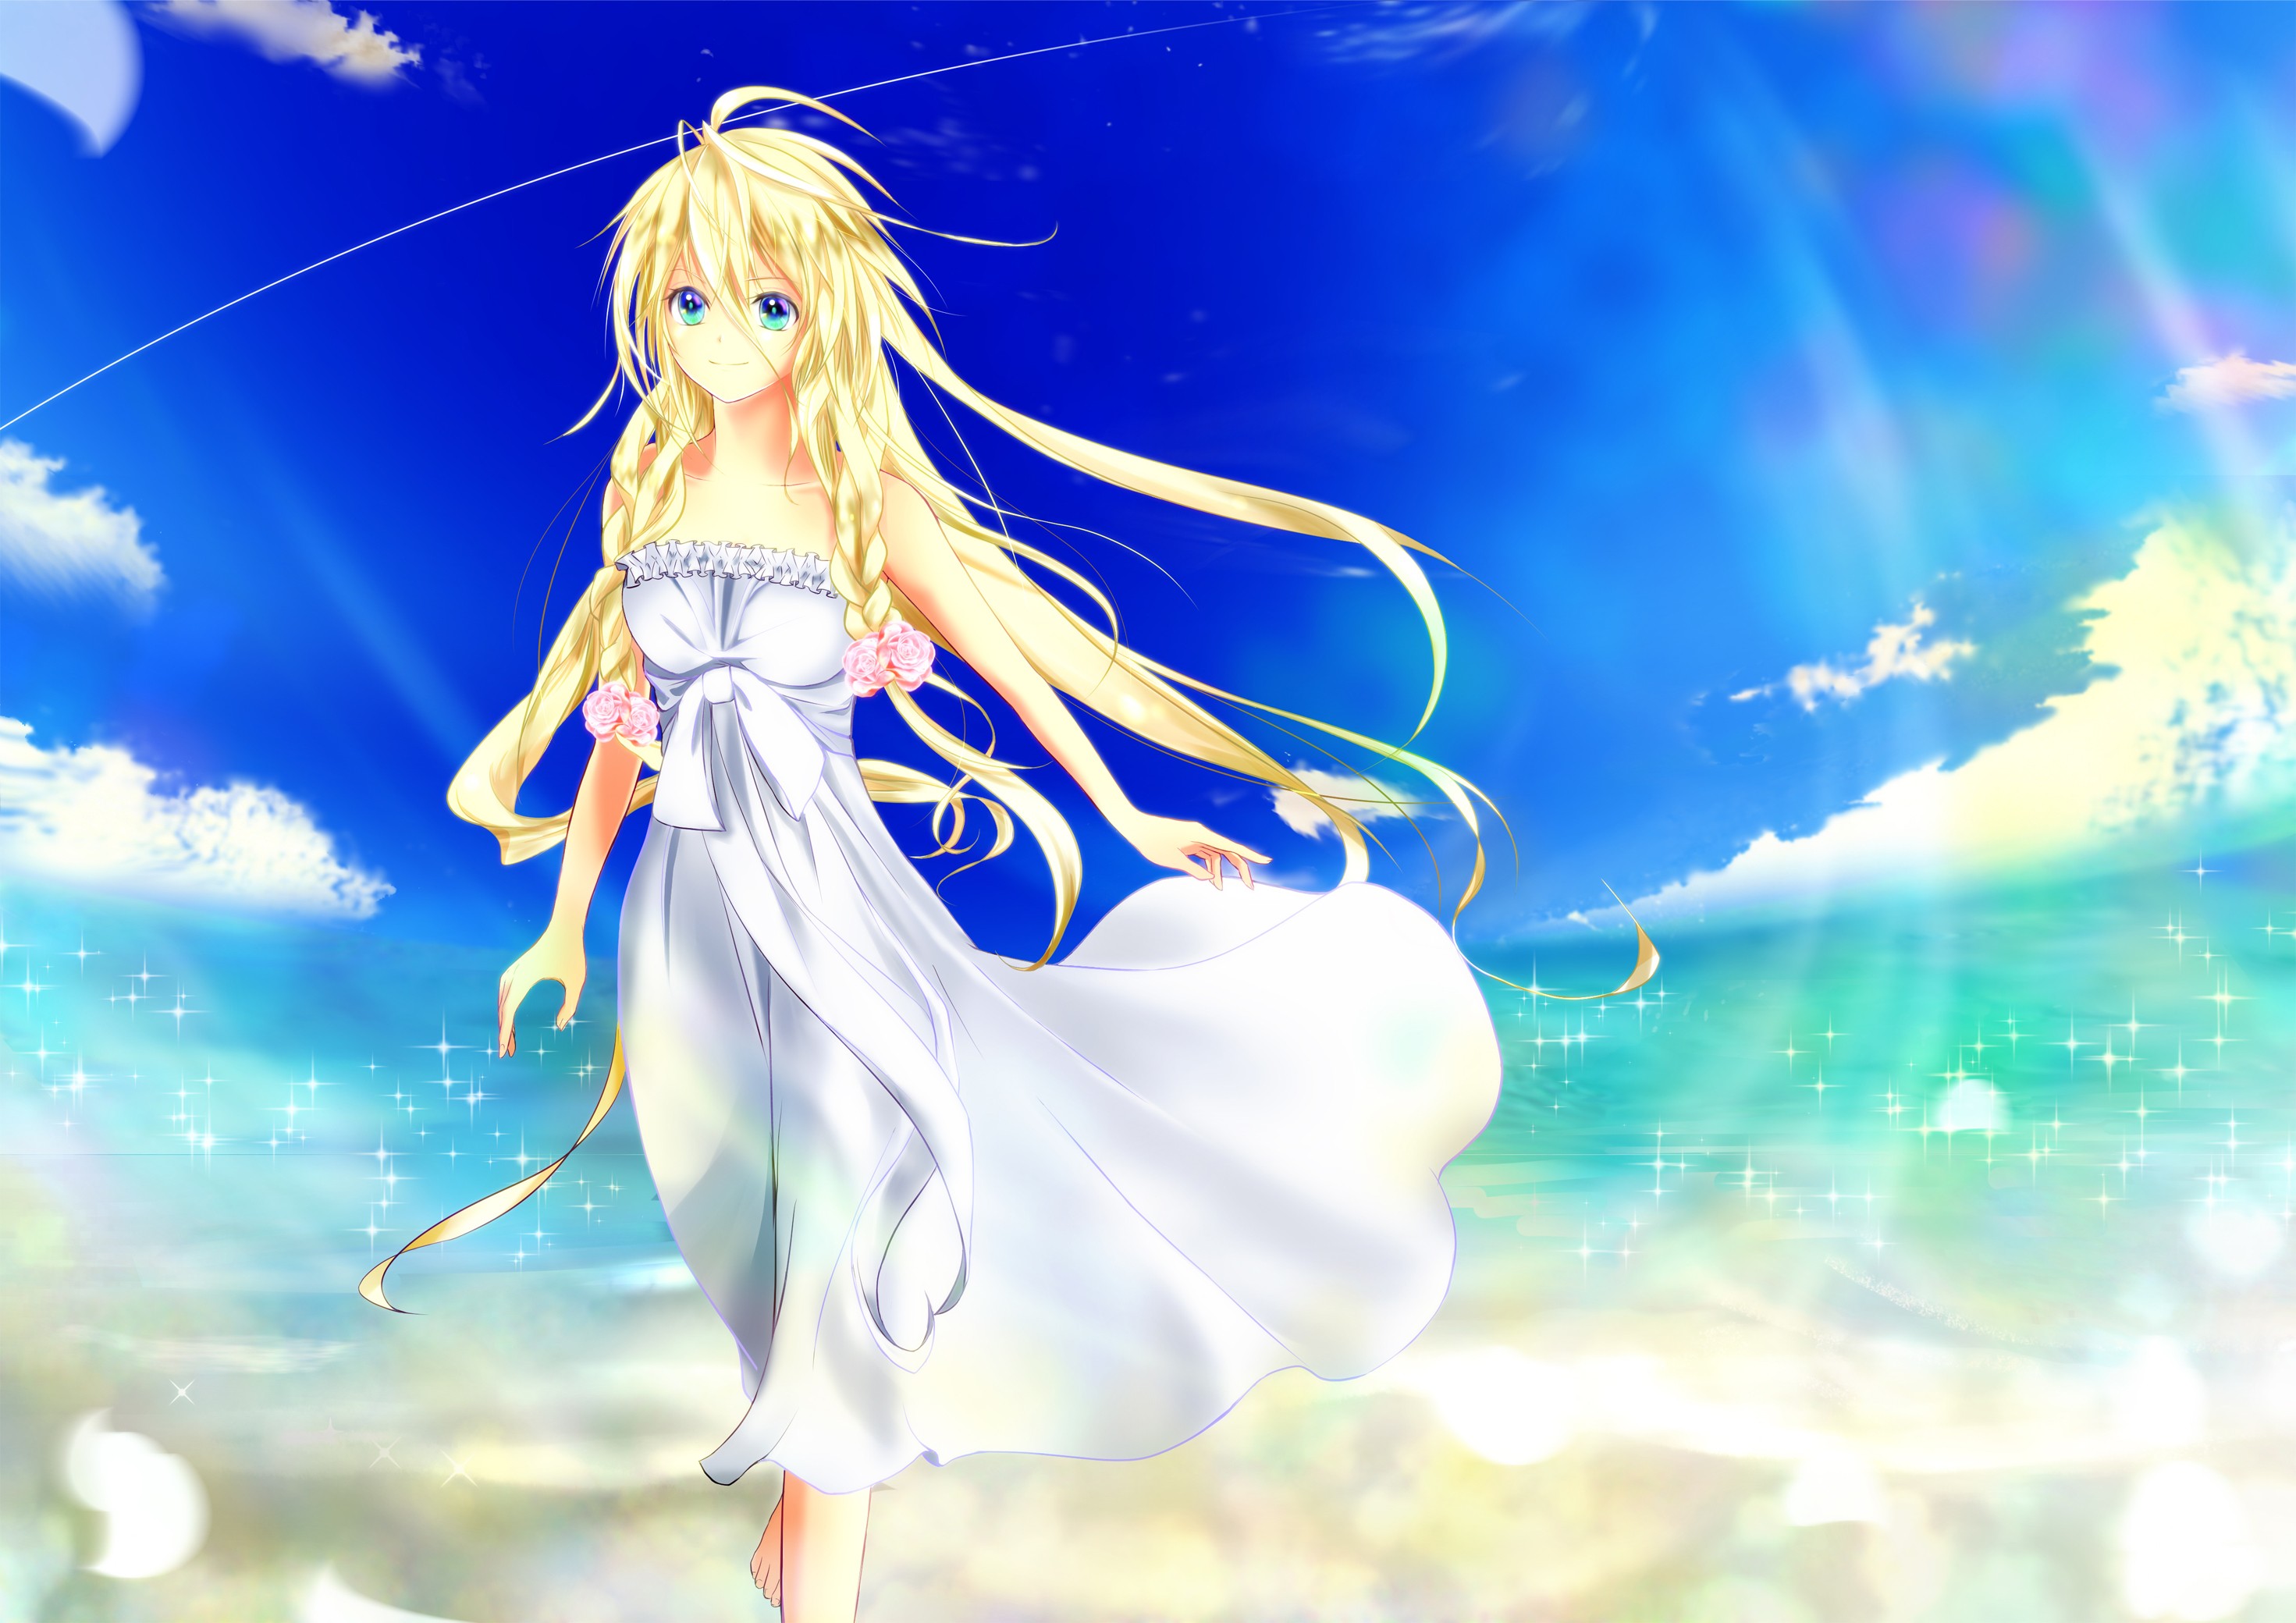 Anime 2942x2080 anime anime girls Vocaloid long hair blonde IA (Vocaloid) sun dress Pixiv sky white dress dress white clothing